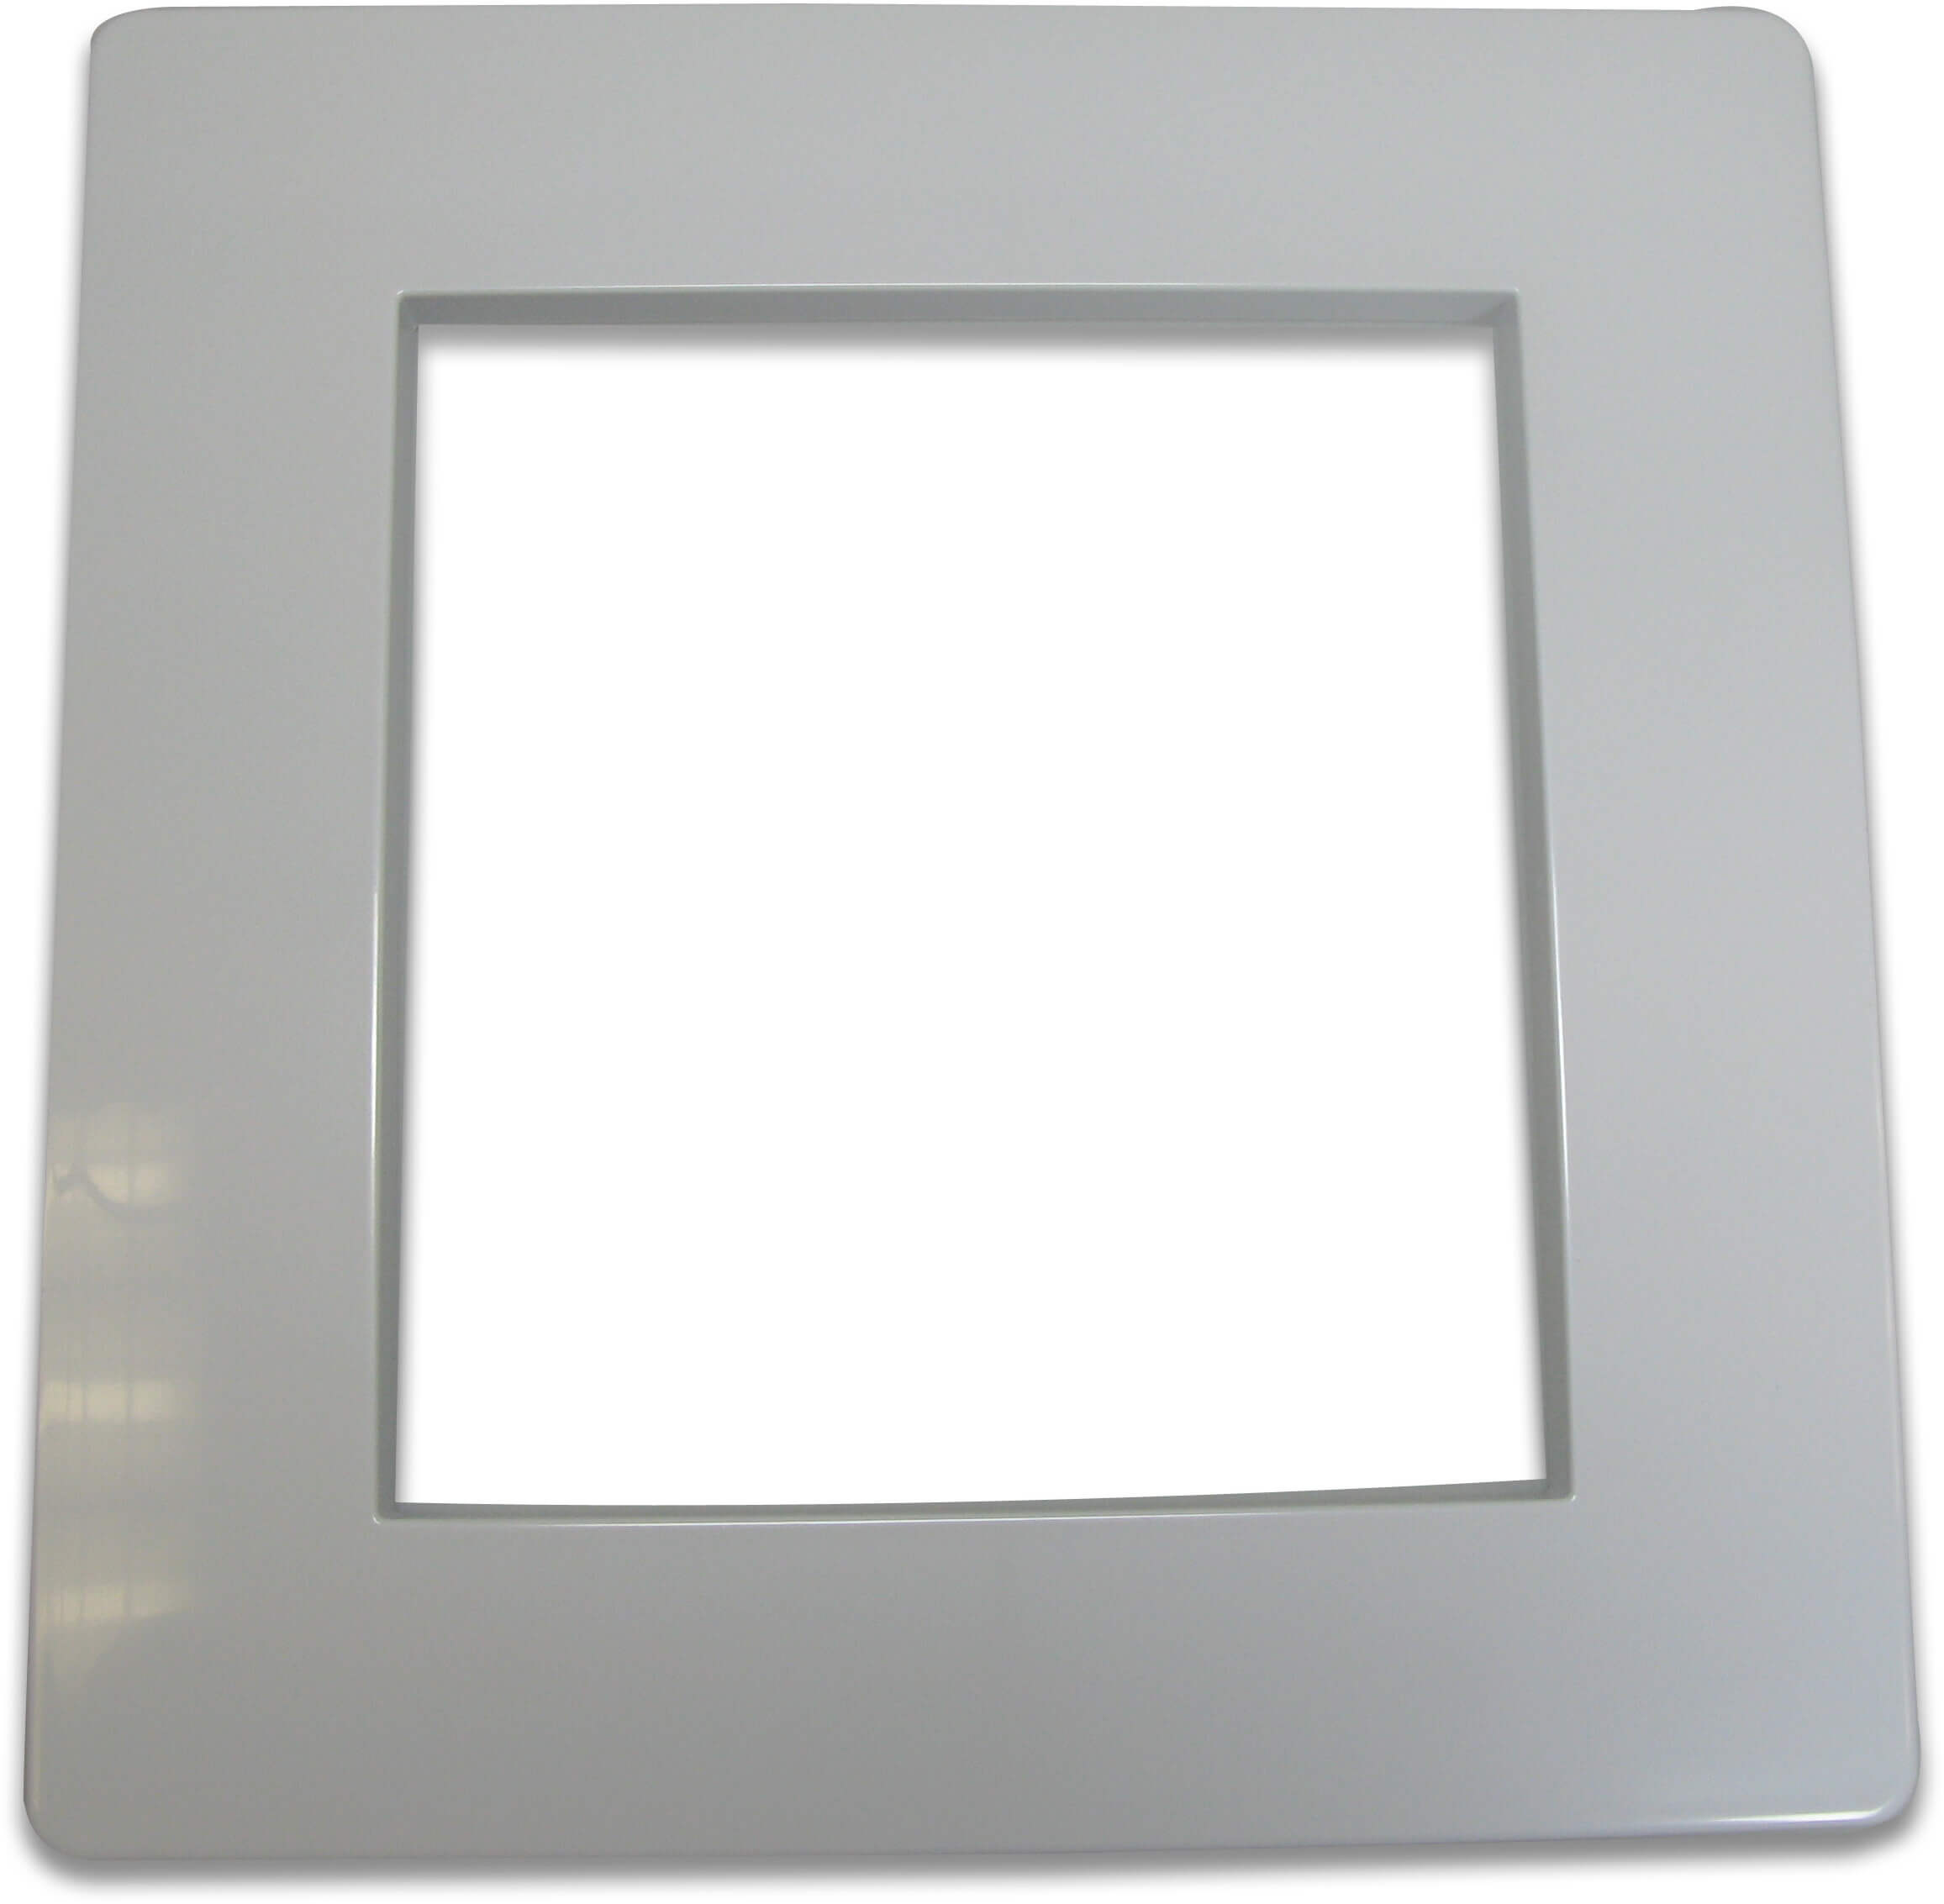 Skimmer cover plate square white